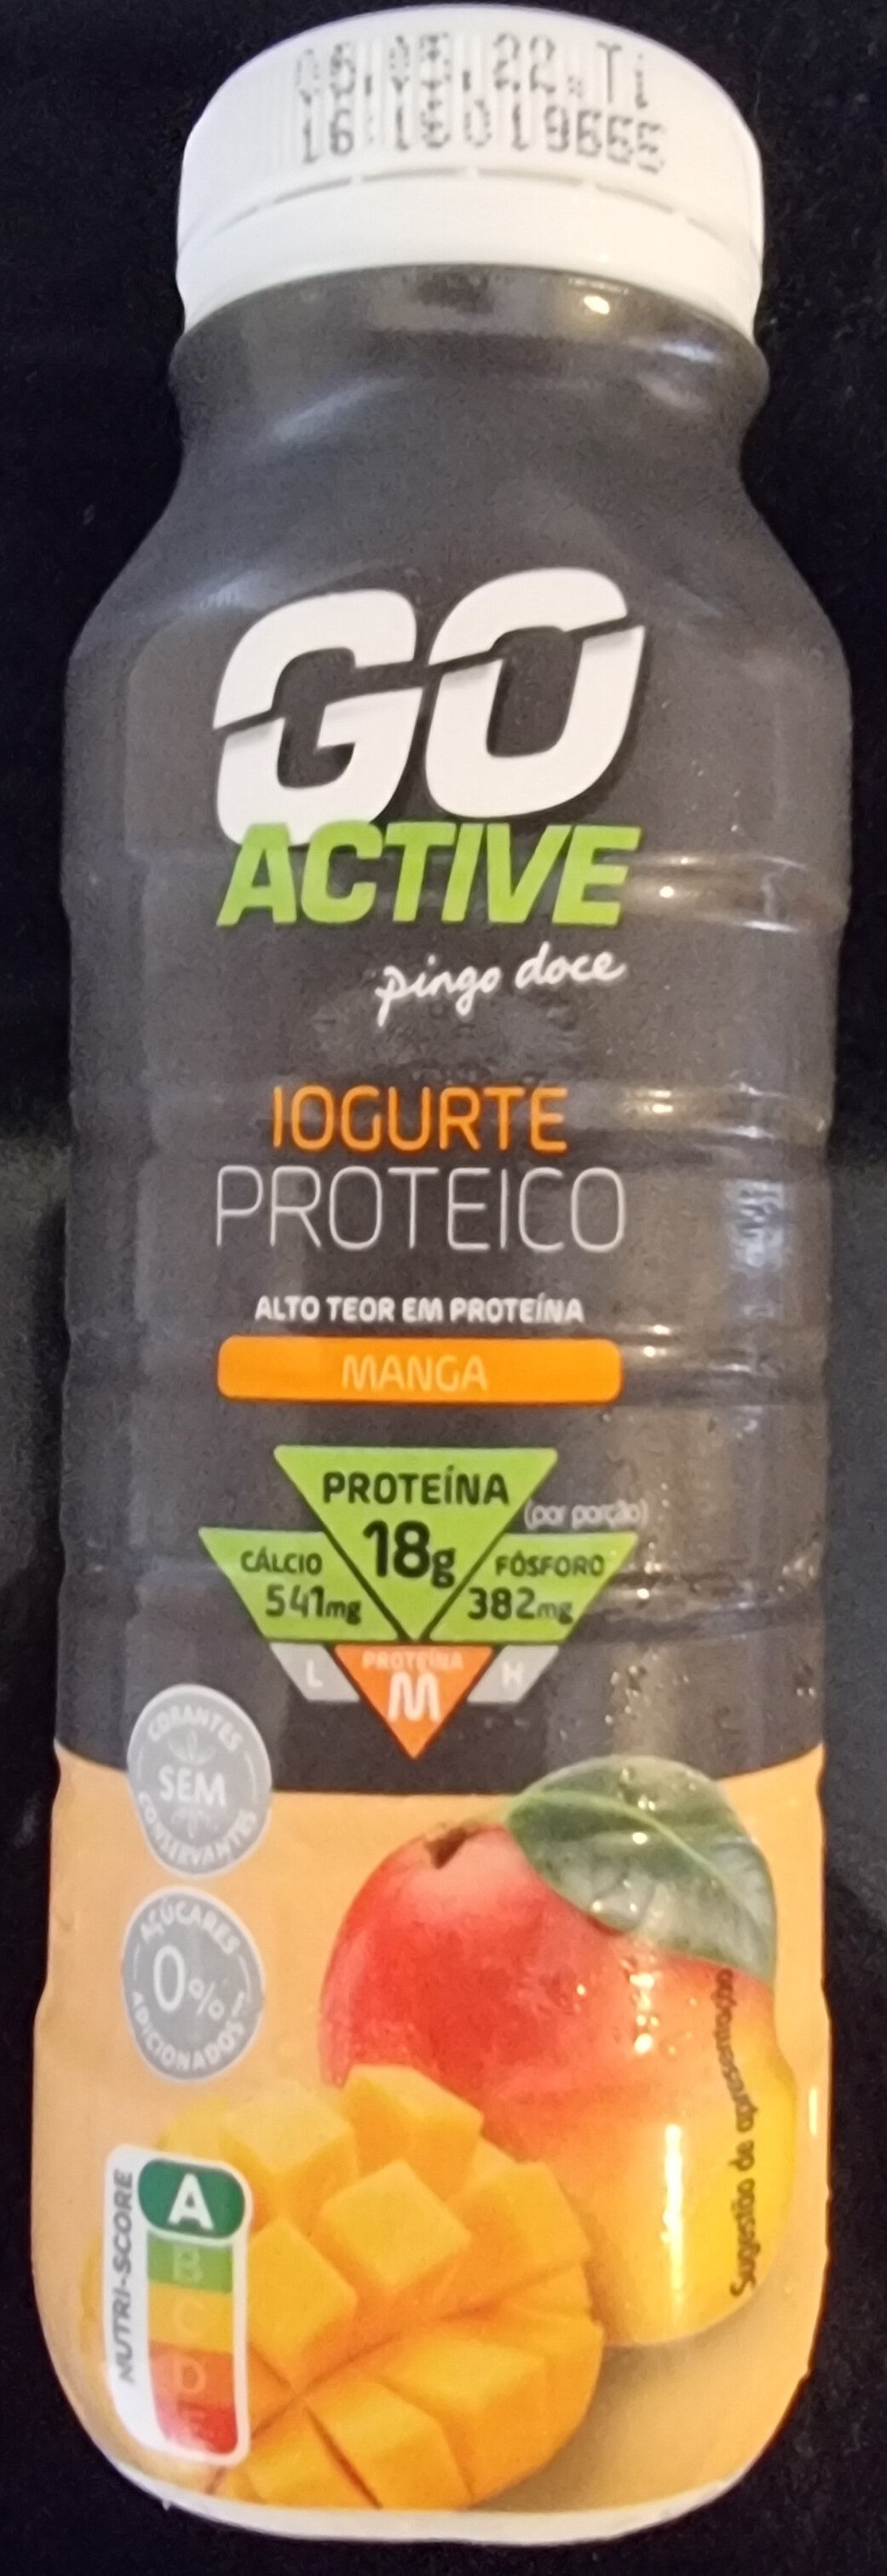 Go Active Iogurte Proteico - نتاج - pt